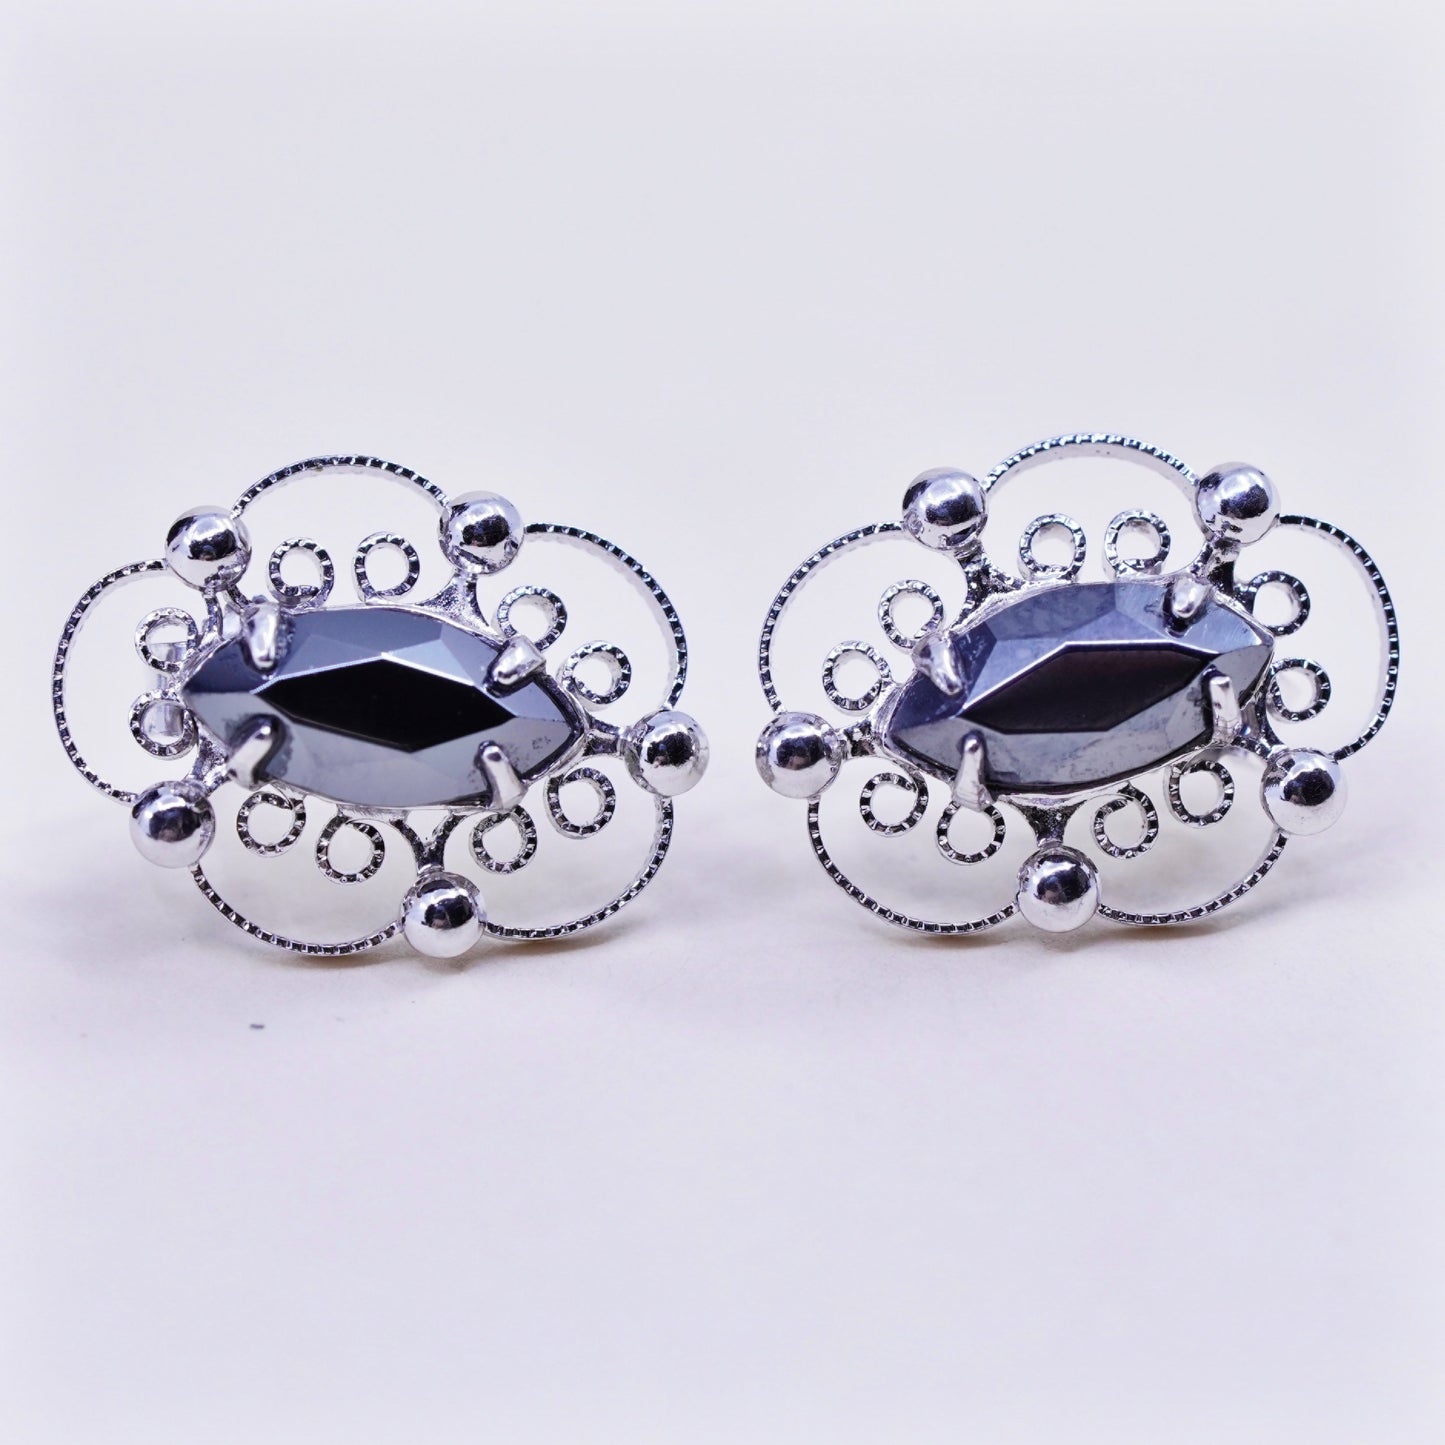 Vintage sterling 925 silver cz studs, filigree hematite earrings